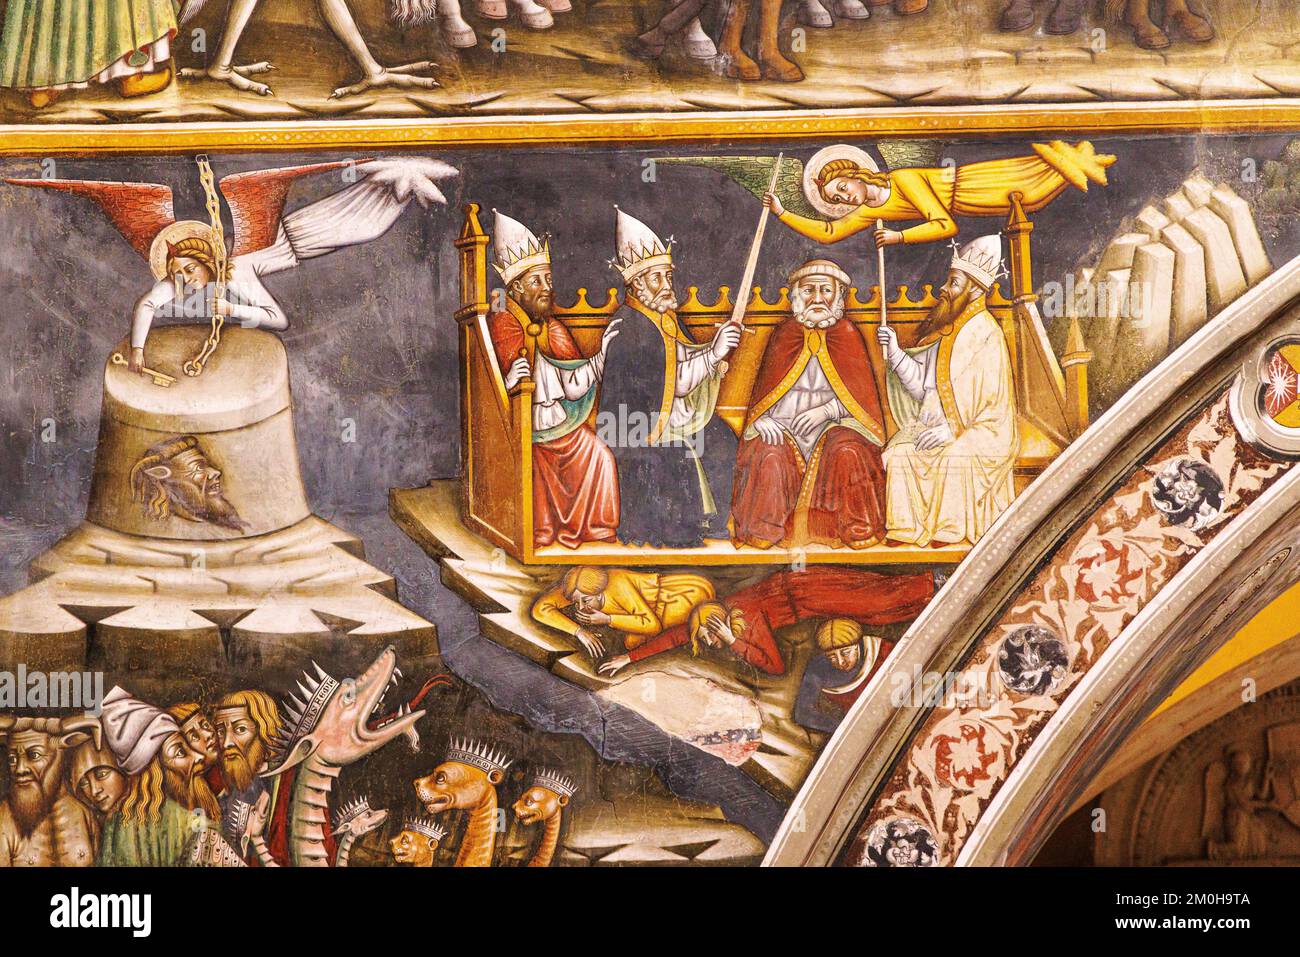 Italy, Apulia, Galatina, Basilica di Santa Caterina d'Alessandria, wall paintings Stock Photo